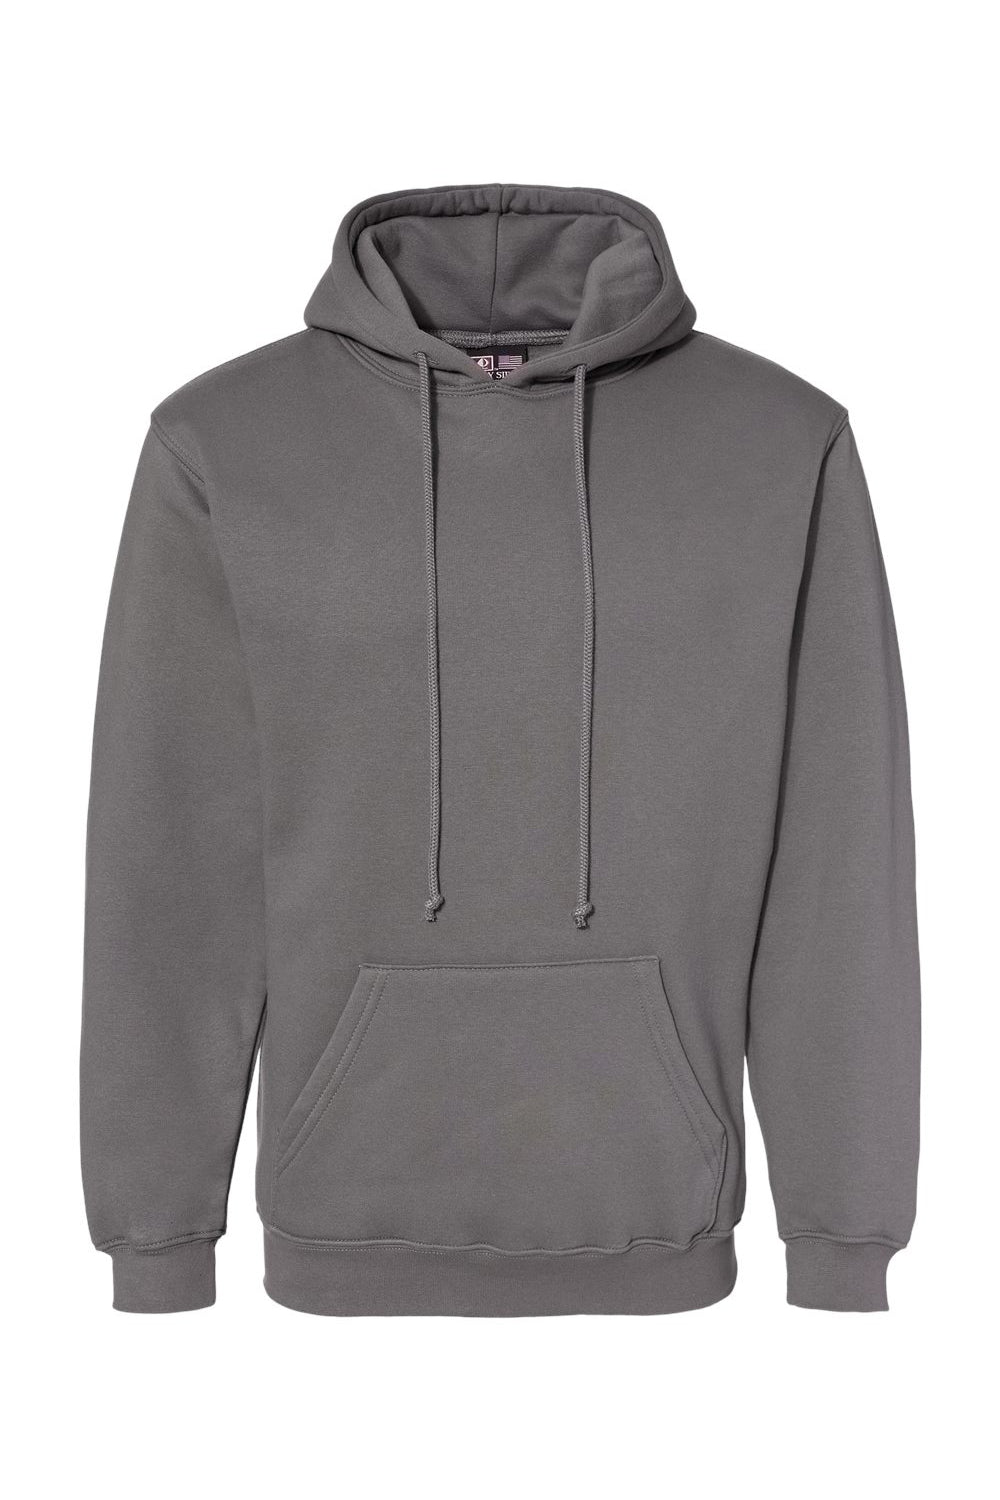 Bayside BA960 Mens USA Made Hooded Sweatshirt Hoodie Charcoal Grey Flat Front